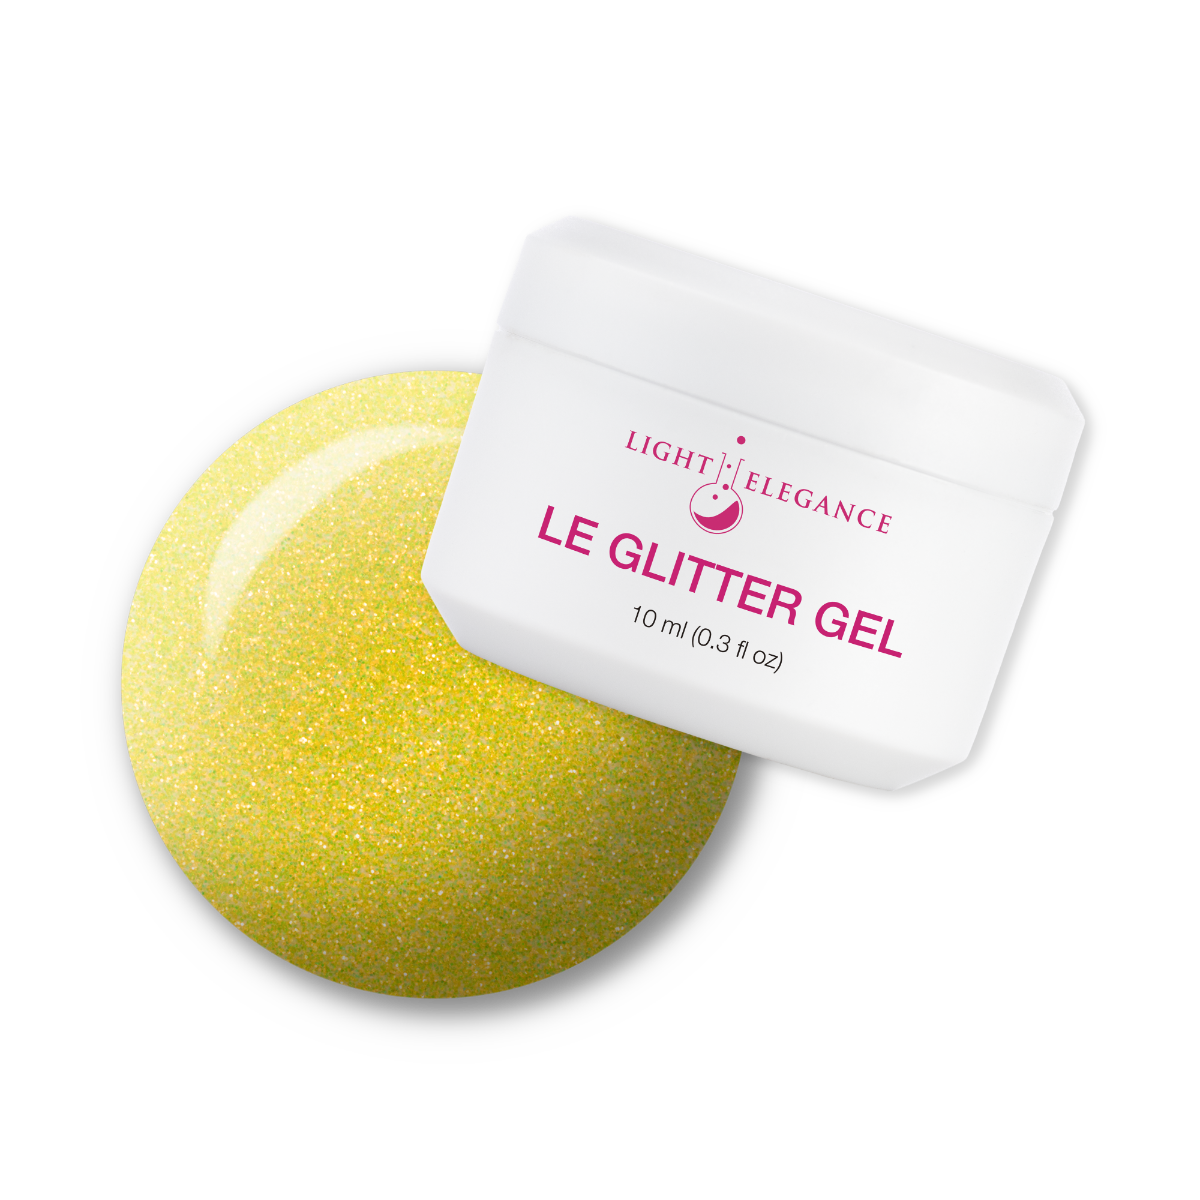 Light Elegance Glitter Gel - Good Vibrations :: New Packaging - Creata Beauty - Professional Beauty Products